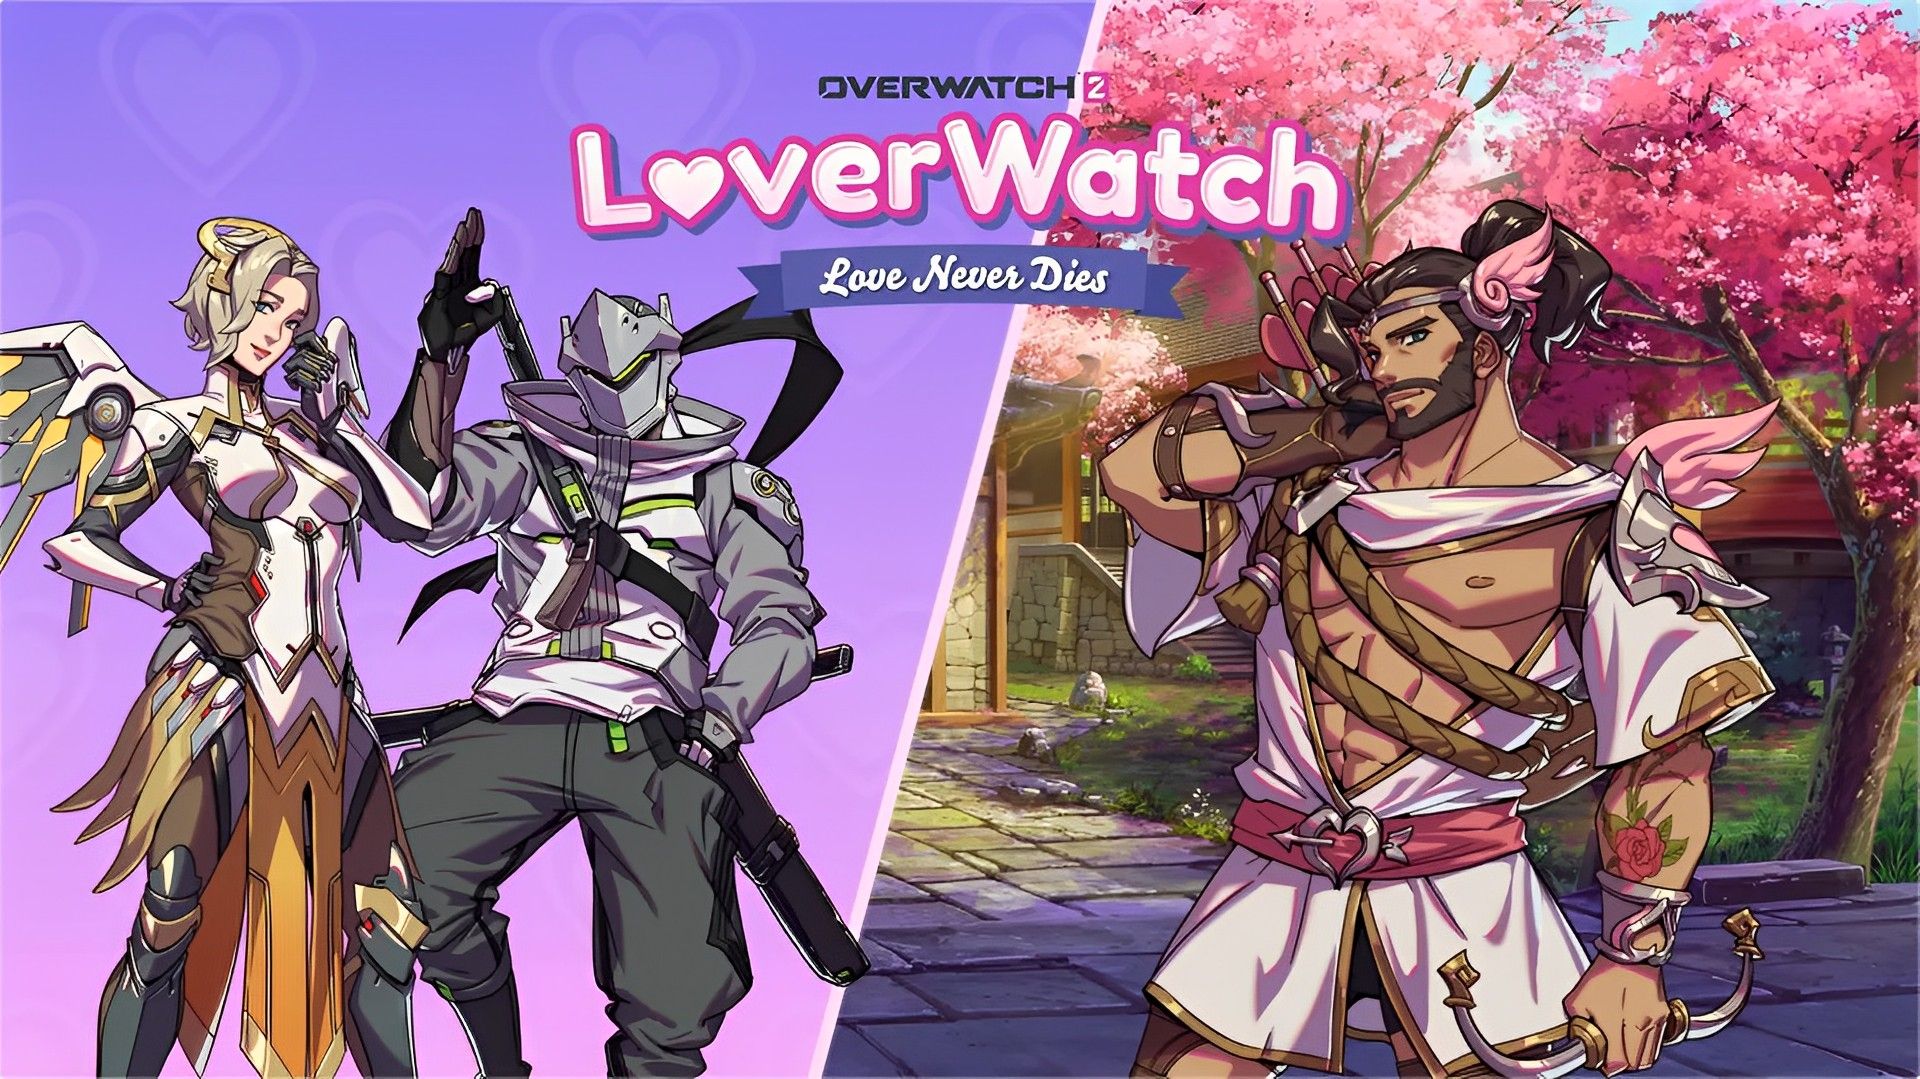 Loverwatch secret ending